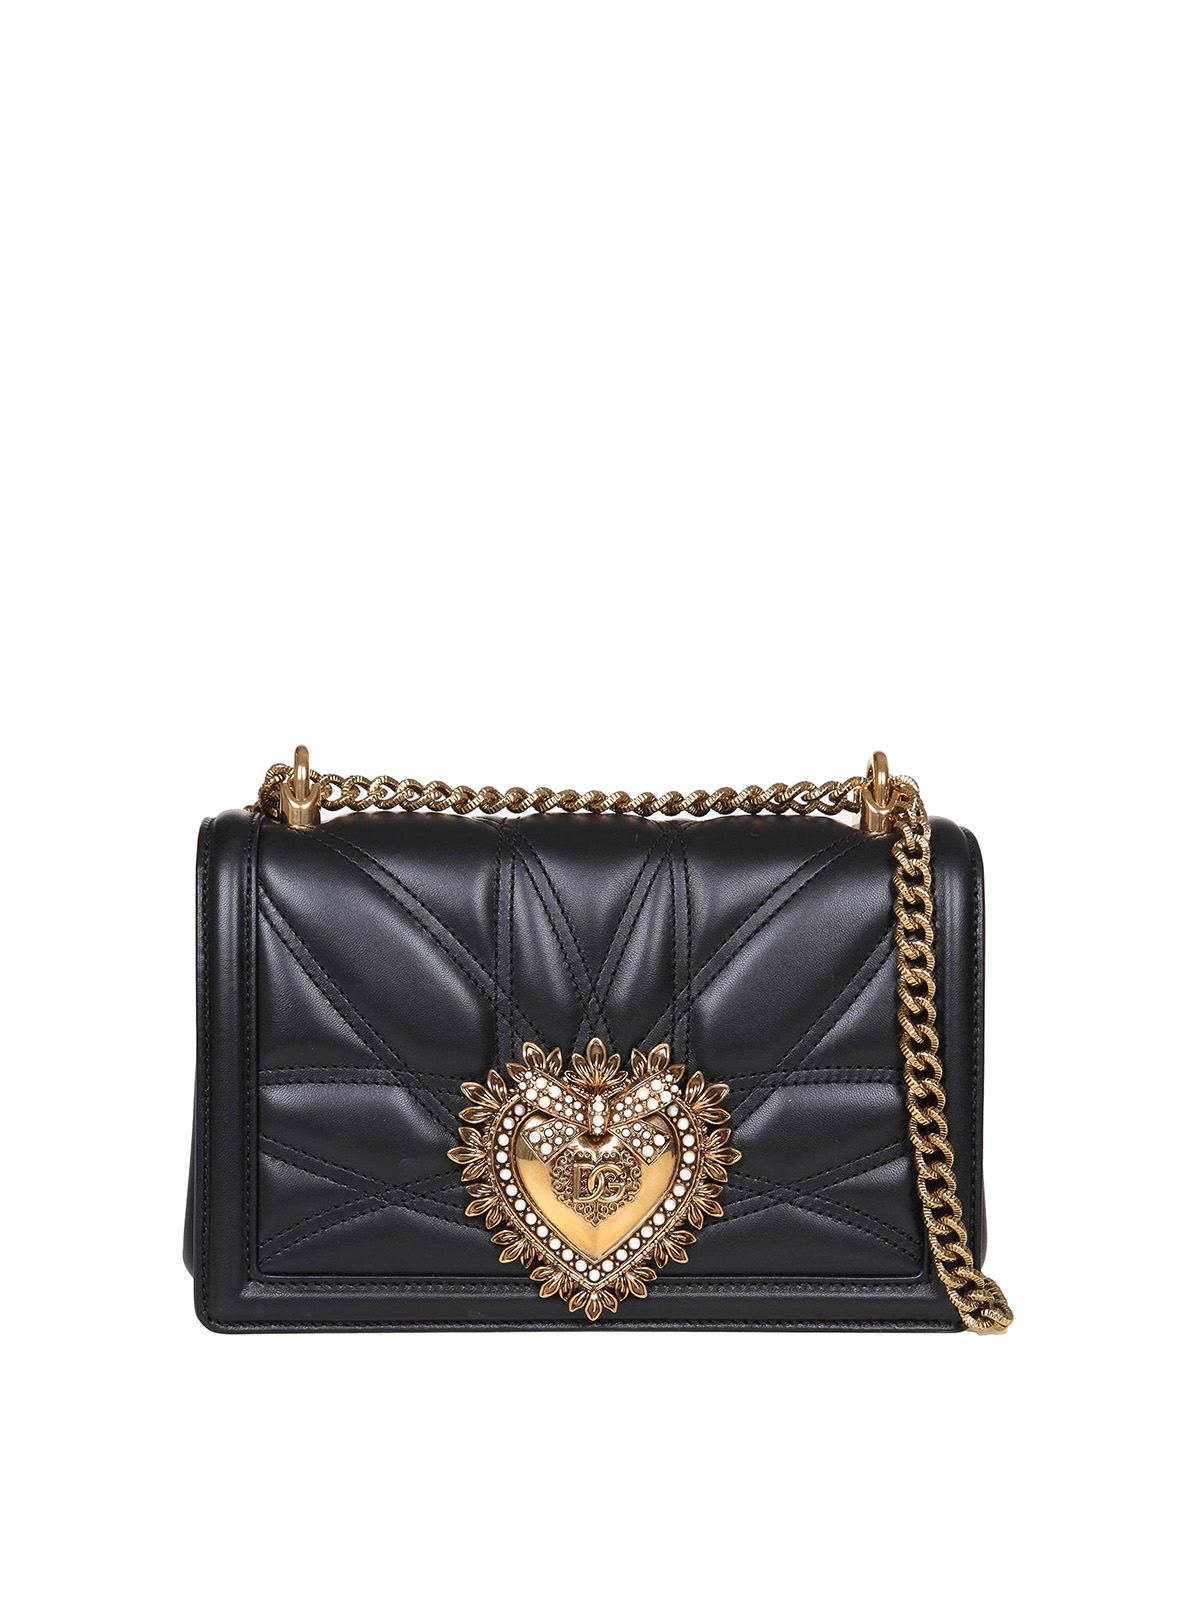 Dolce & Gabbana Devotion Medium Bag In Black